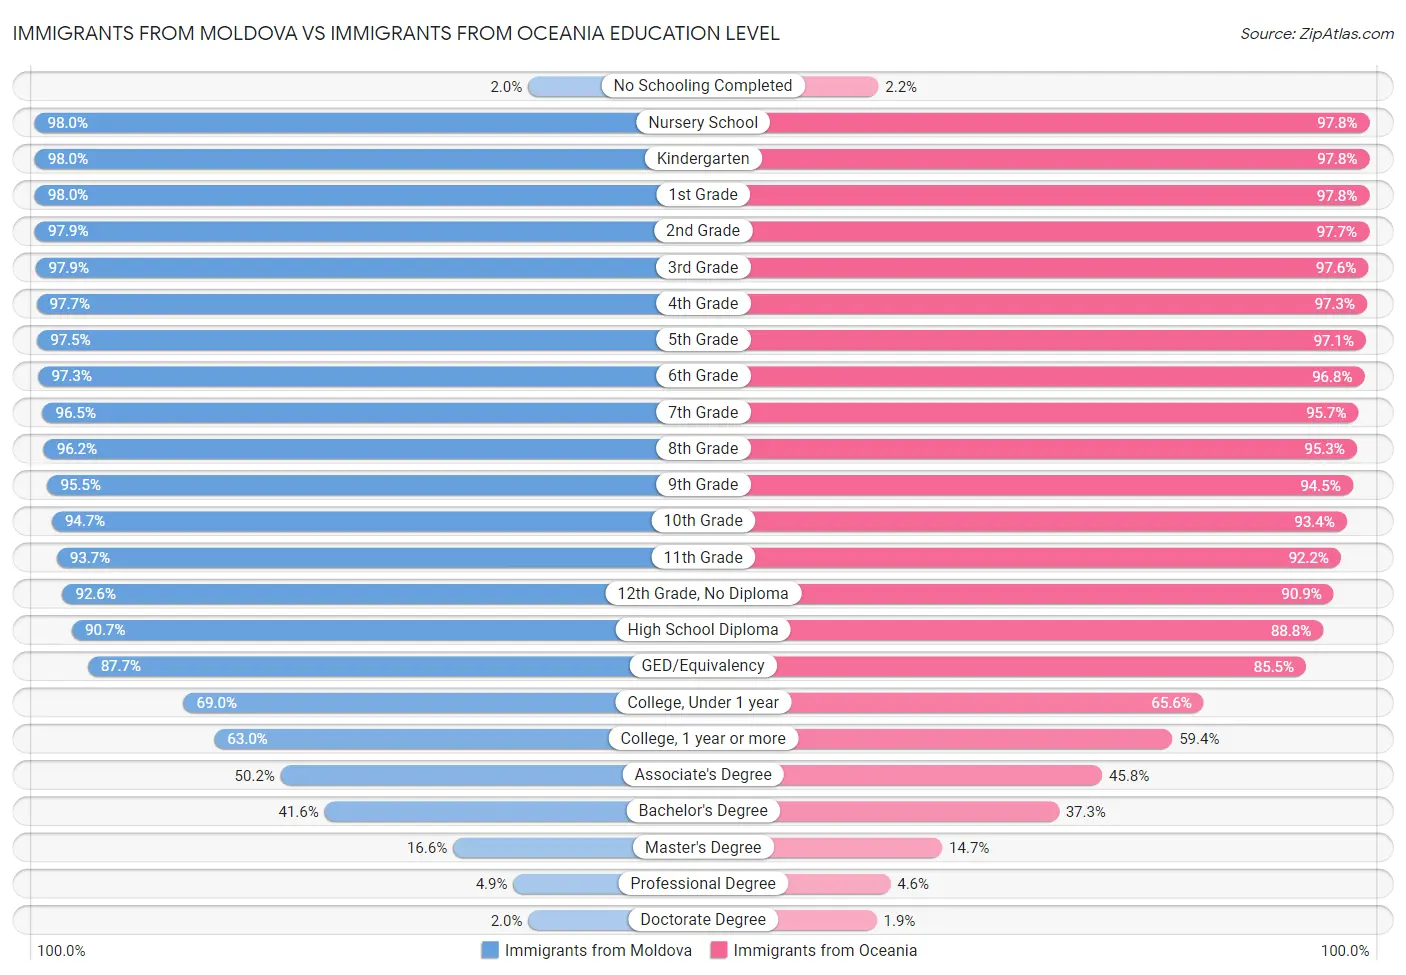 Immigrants from Moldova vs Immigrants from Oceania Education Level